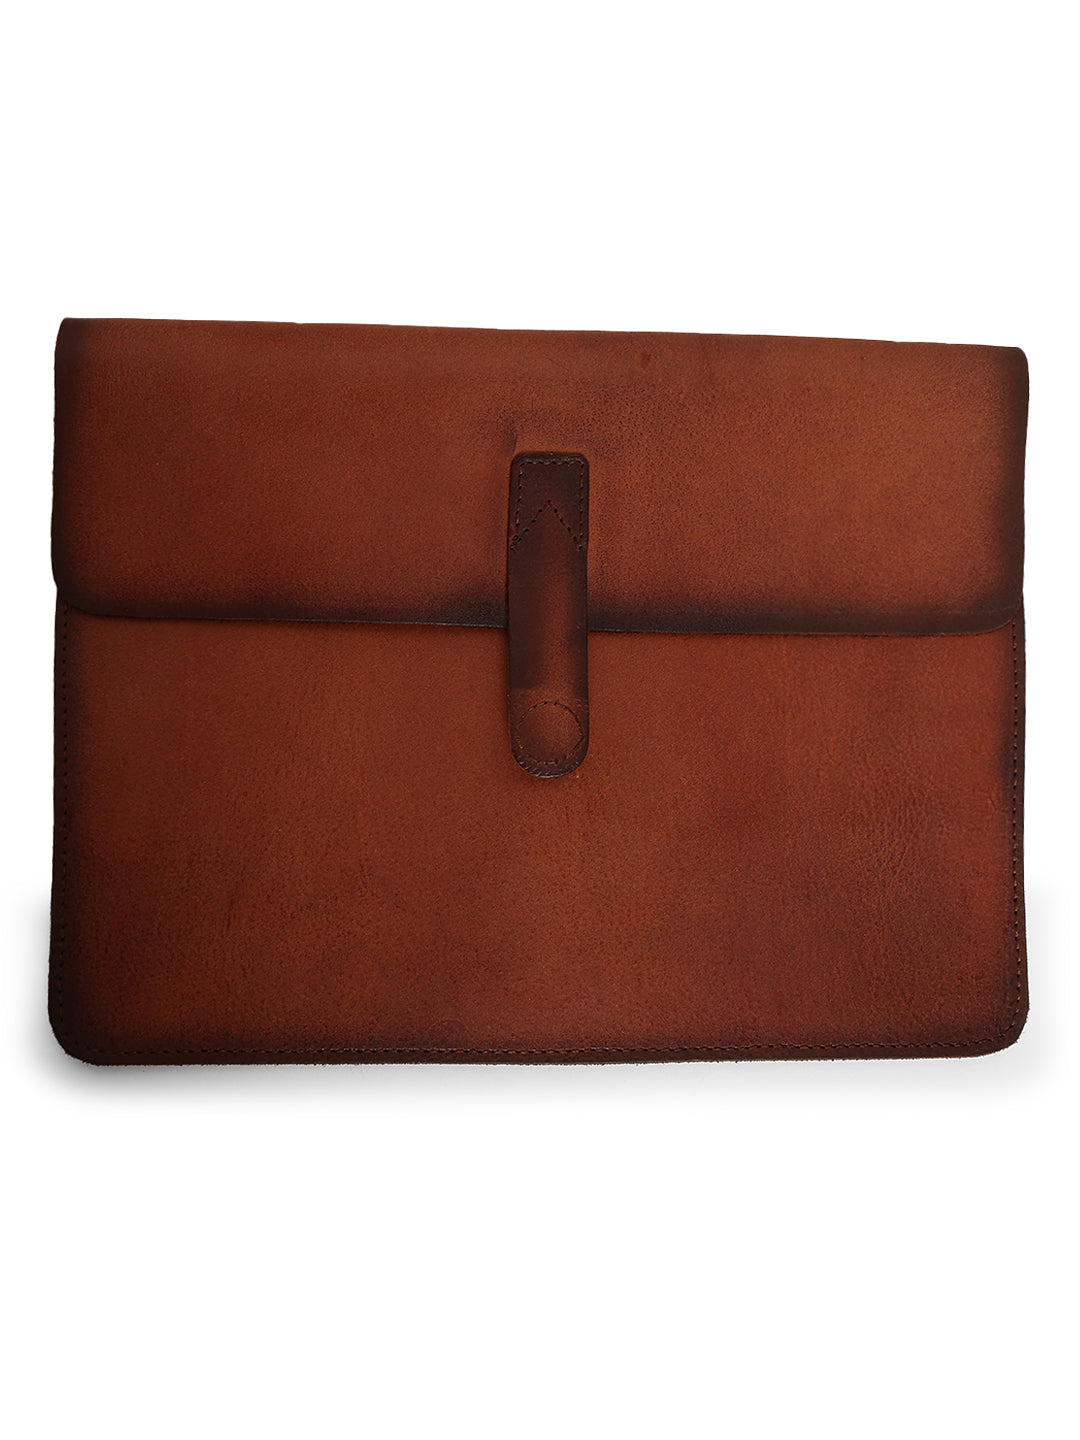 Prestige Cognac Leather Laptop Sleeves